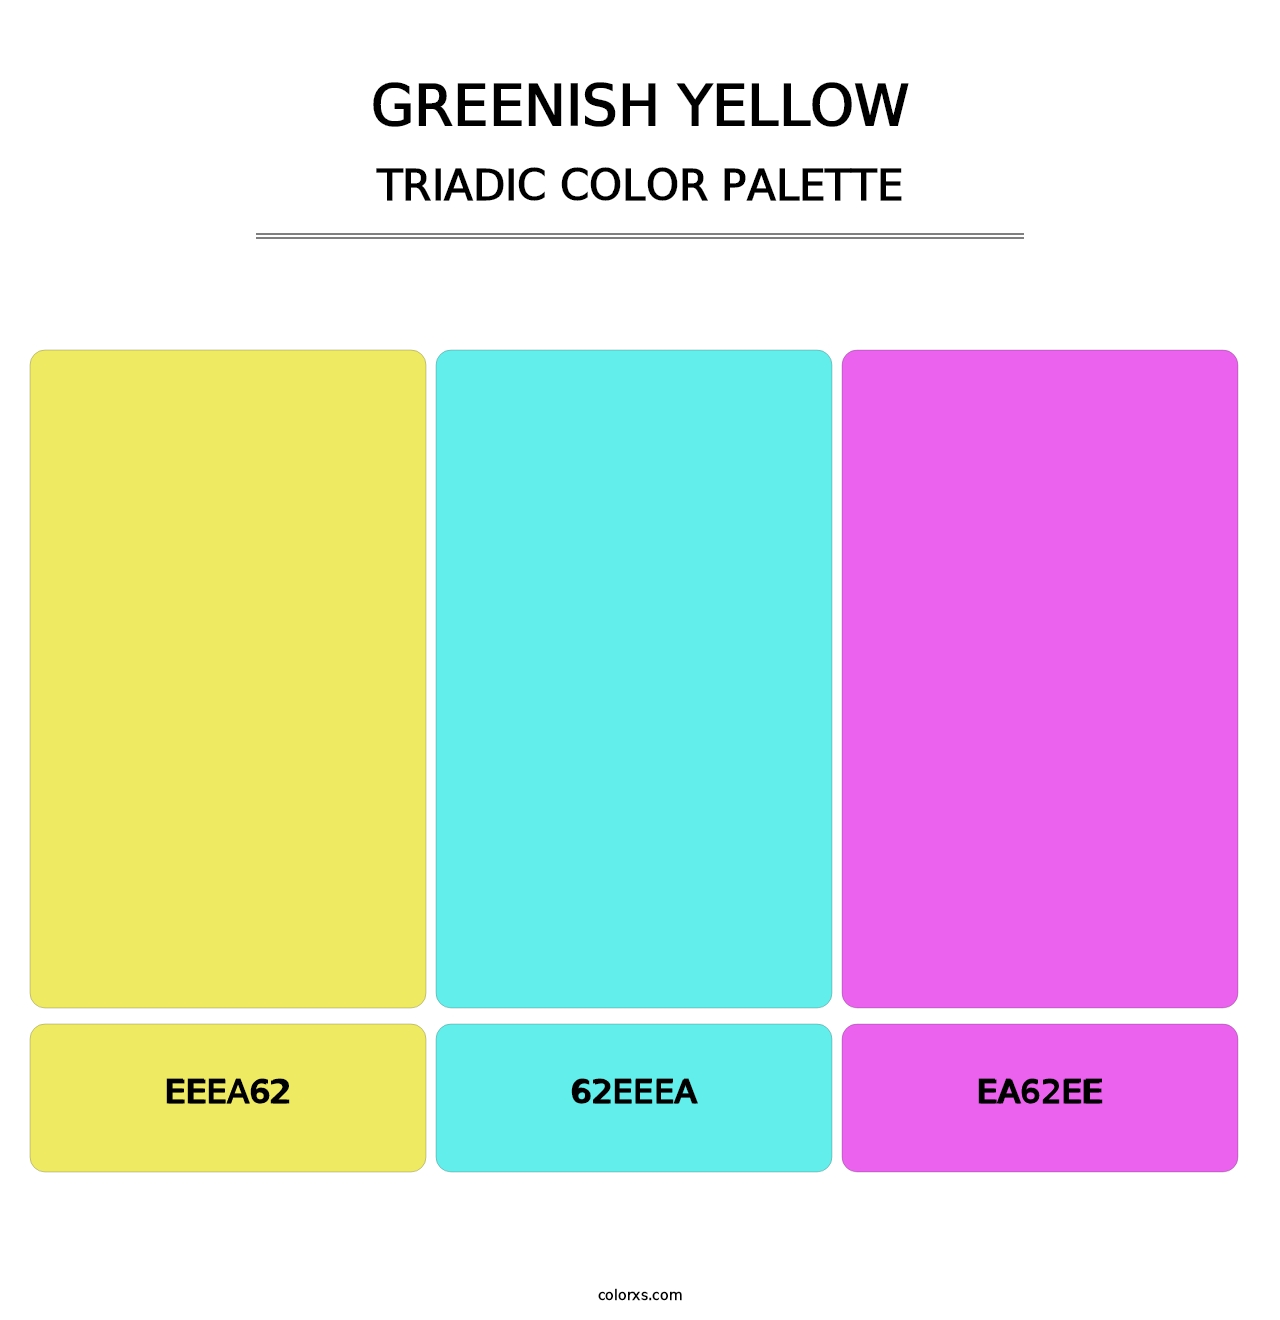 Greenish Yellow - Triadic Color Palette